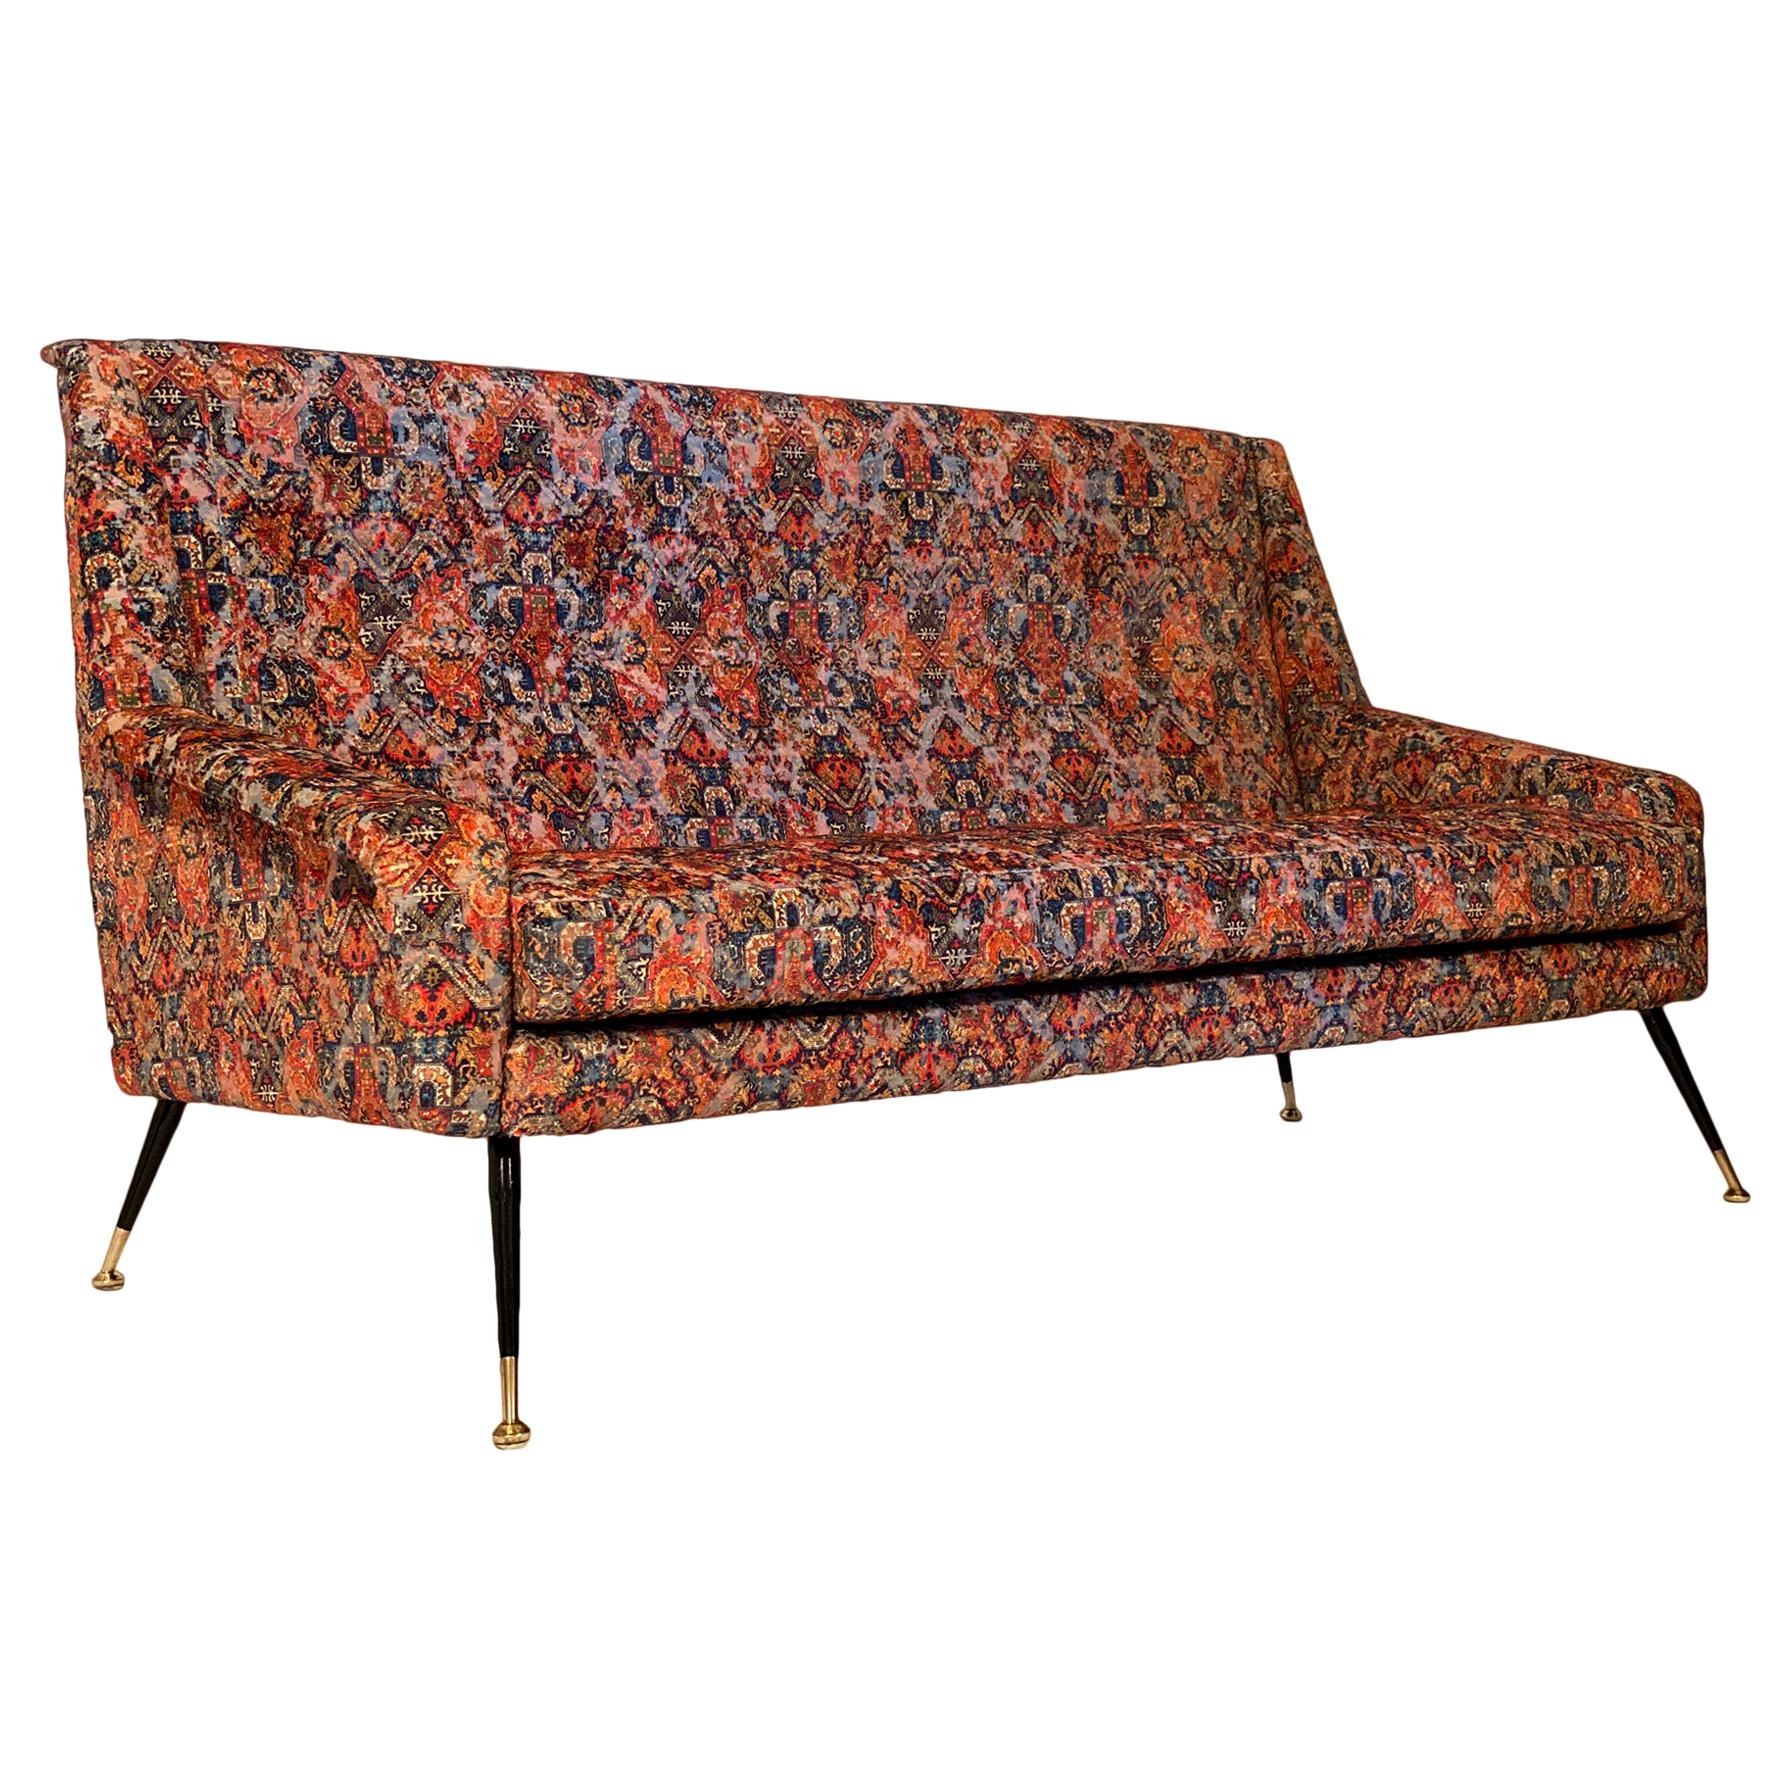 Italian Vintage Sofa with Rubelli Upholstery